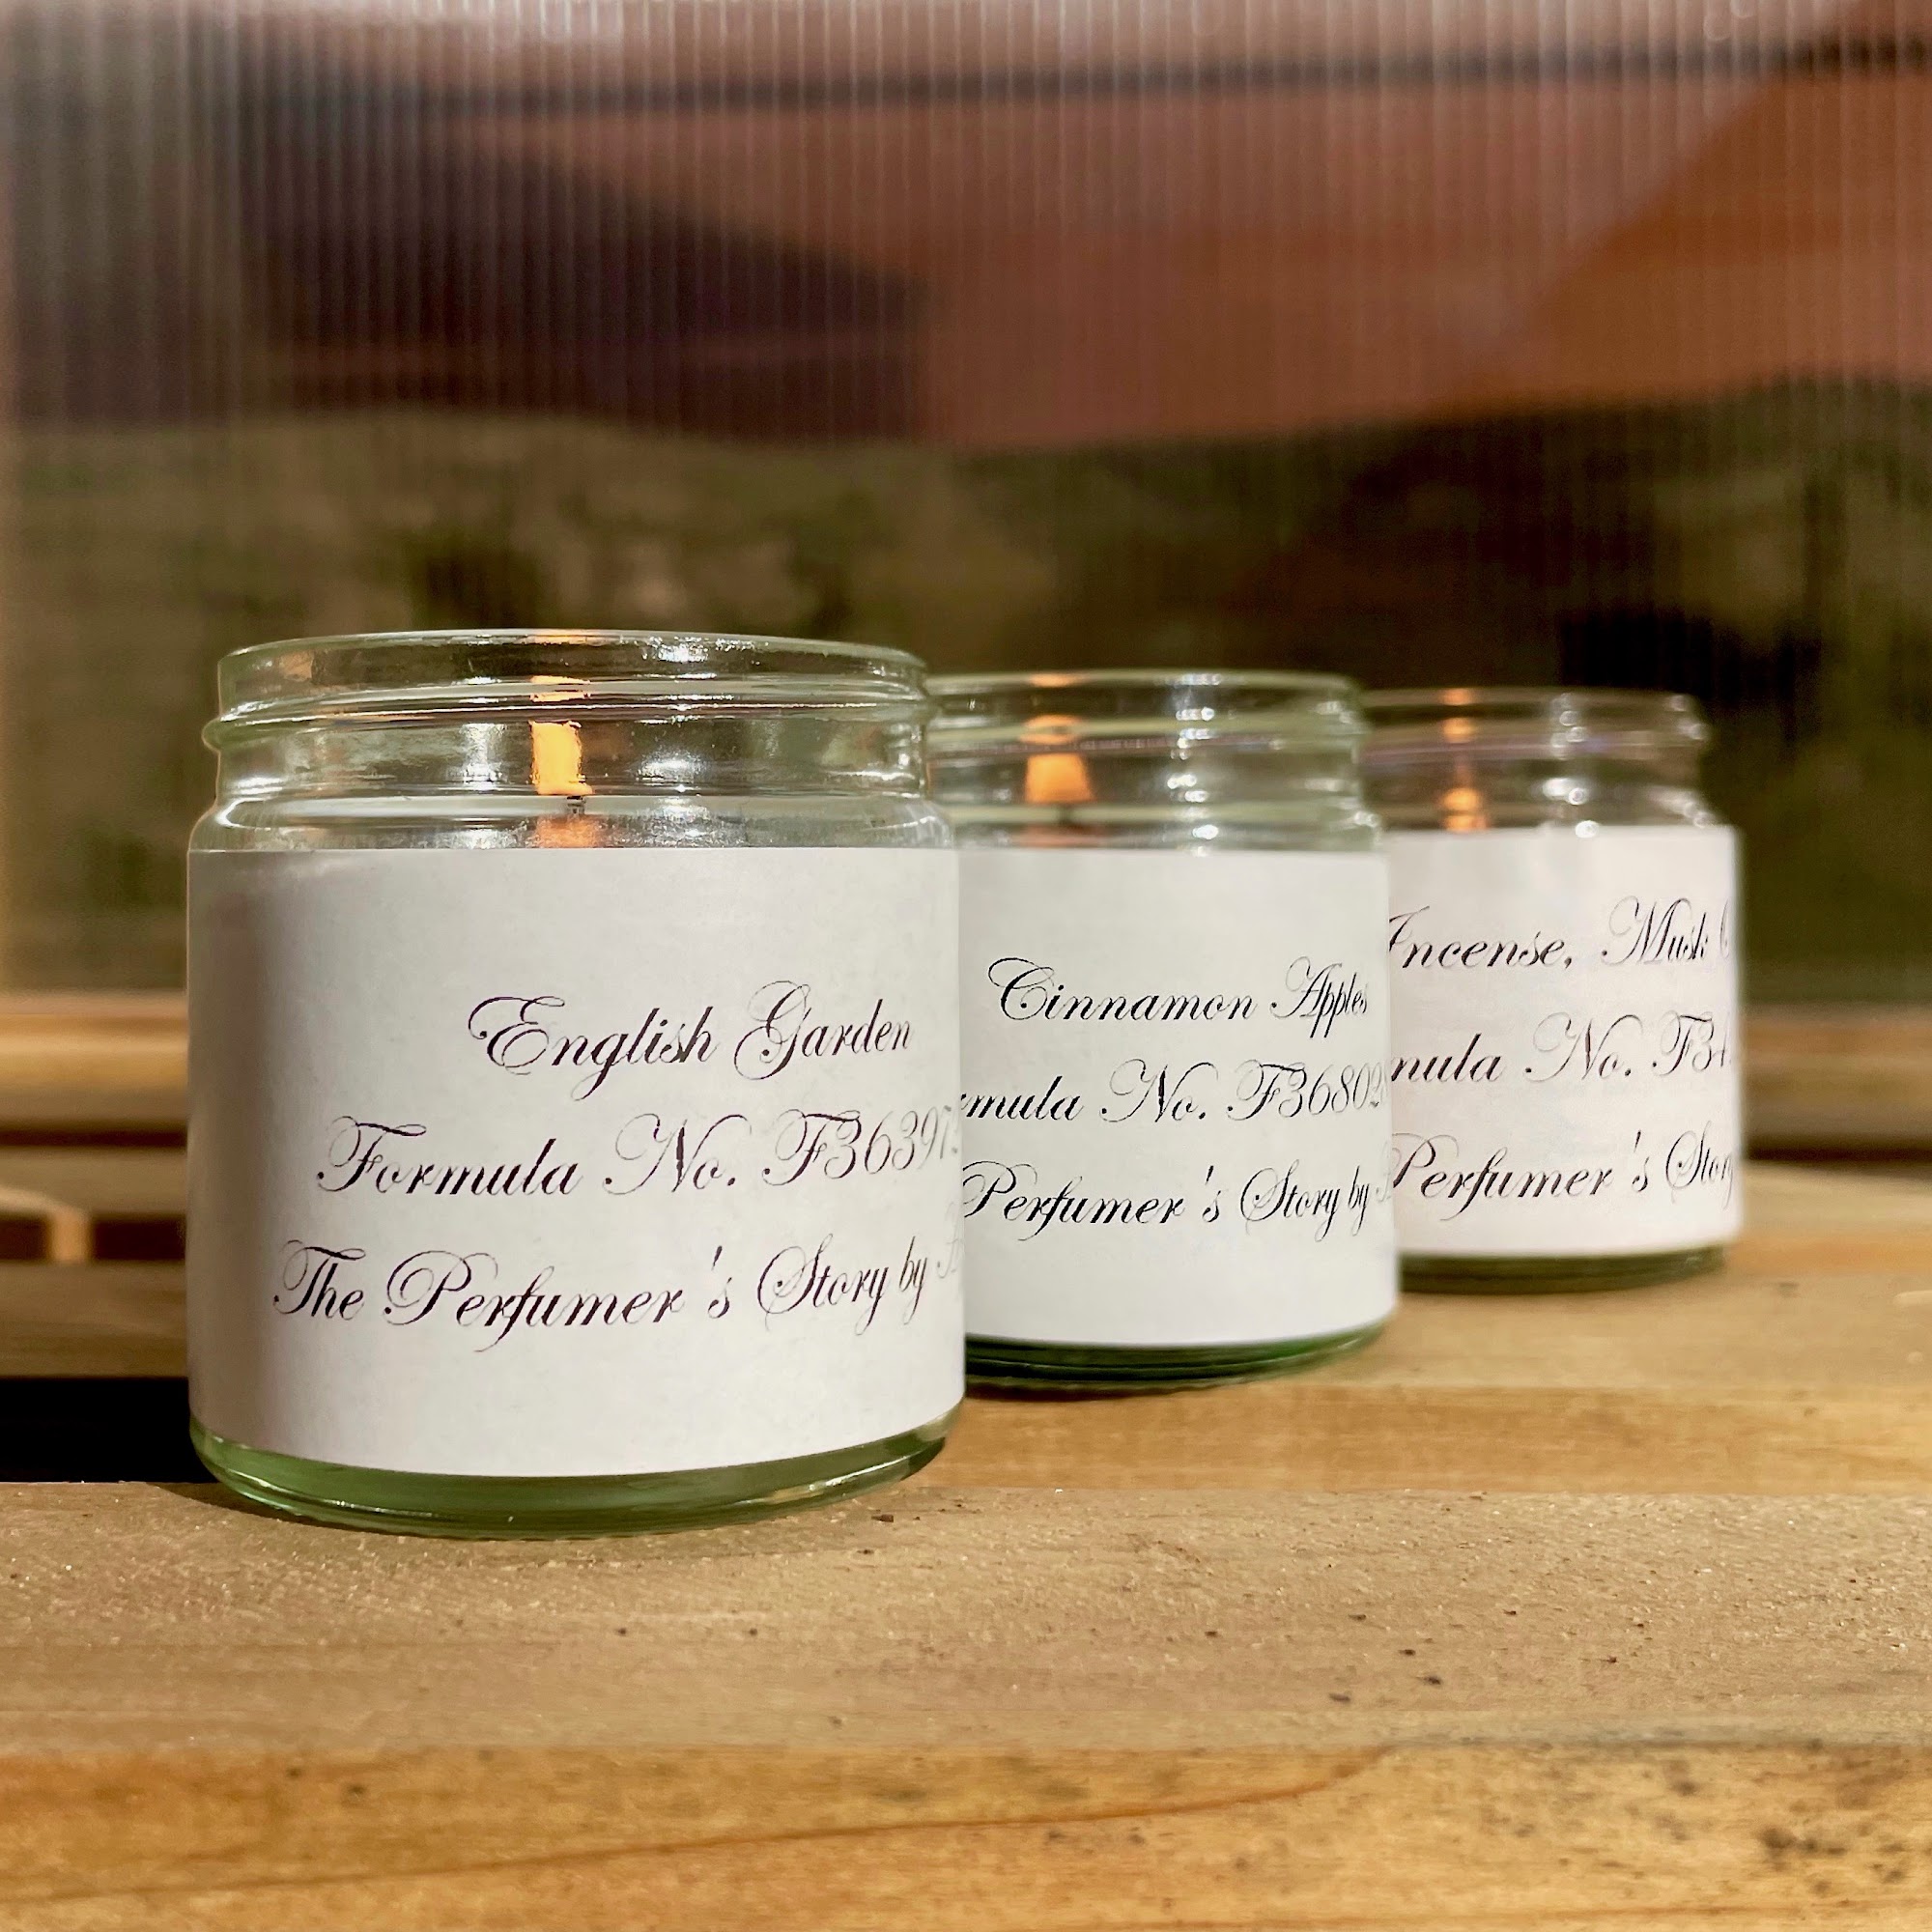 Azzi Glasser's new Azzi's Archive Candles